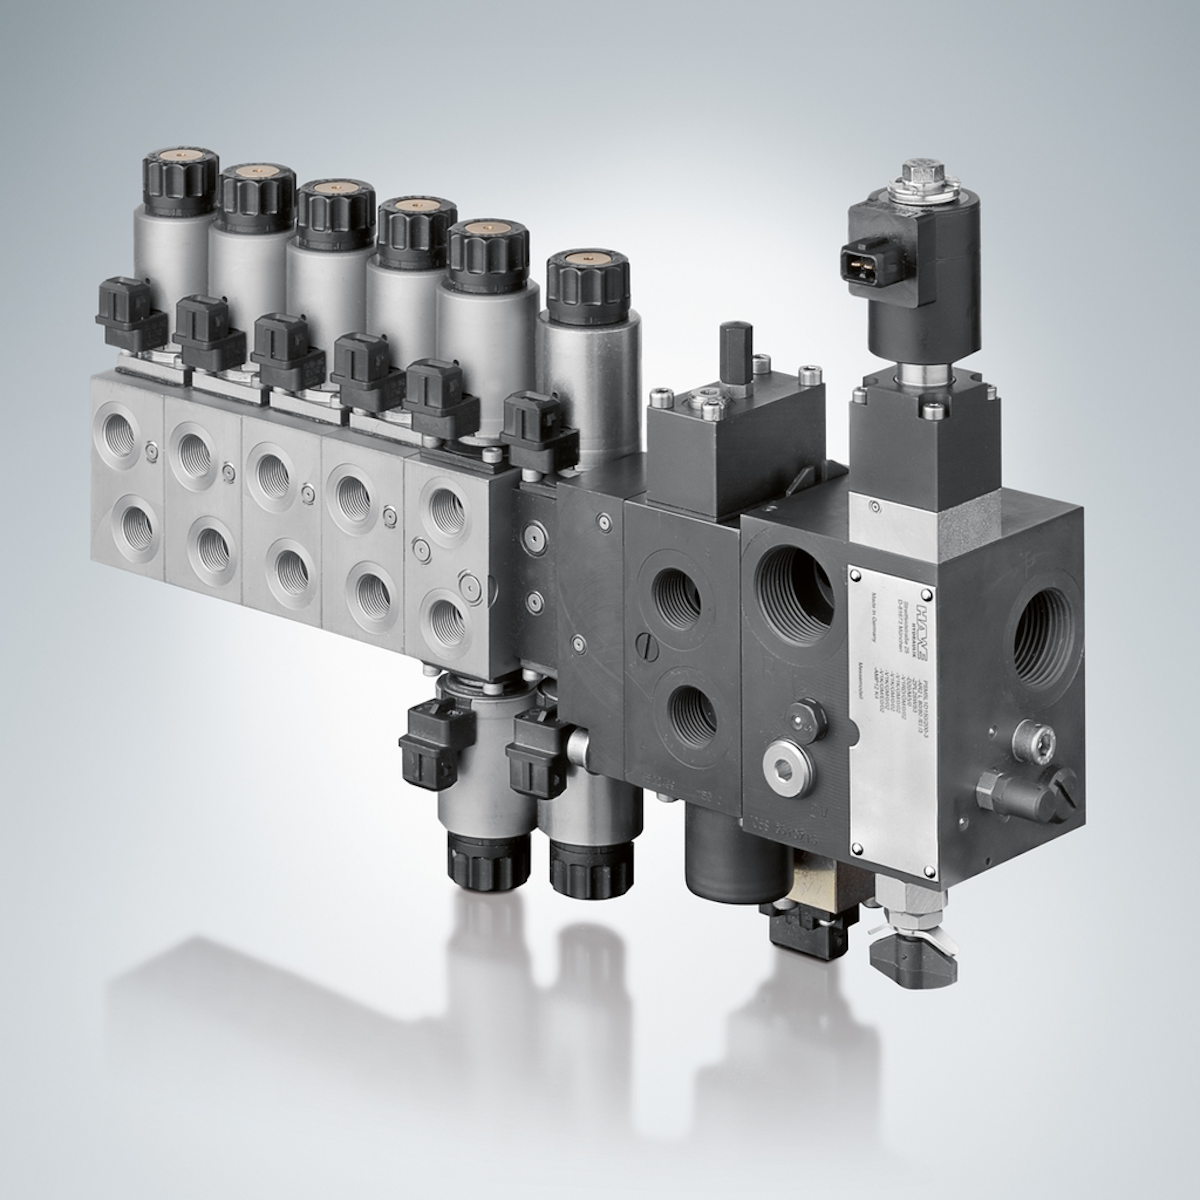 HAWE Hydraulik introduces new variant of PSL spool valve at ...